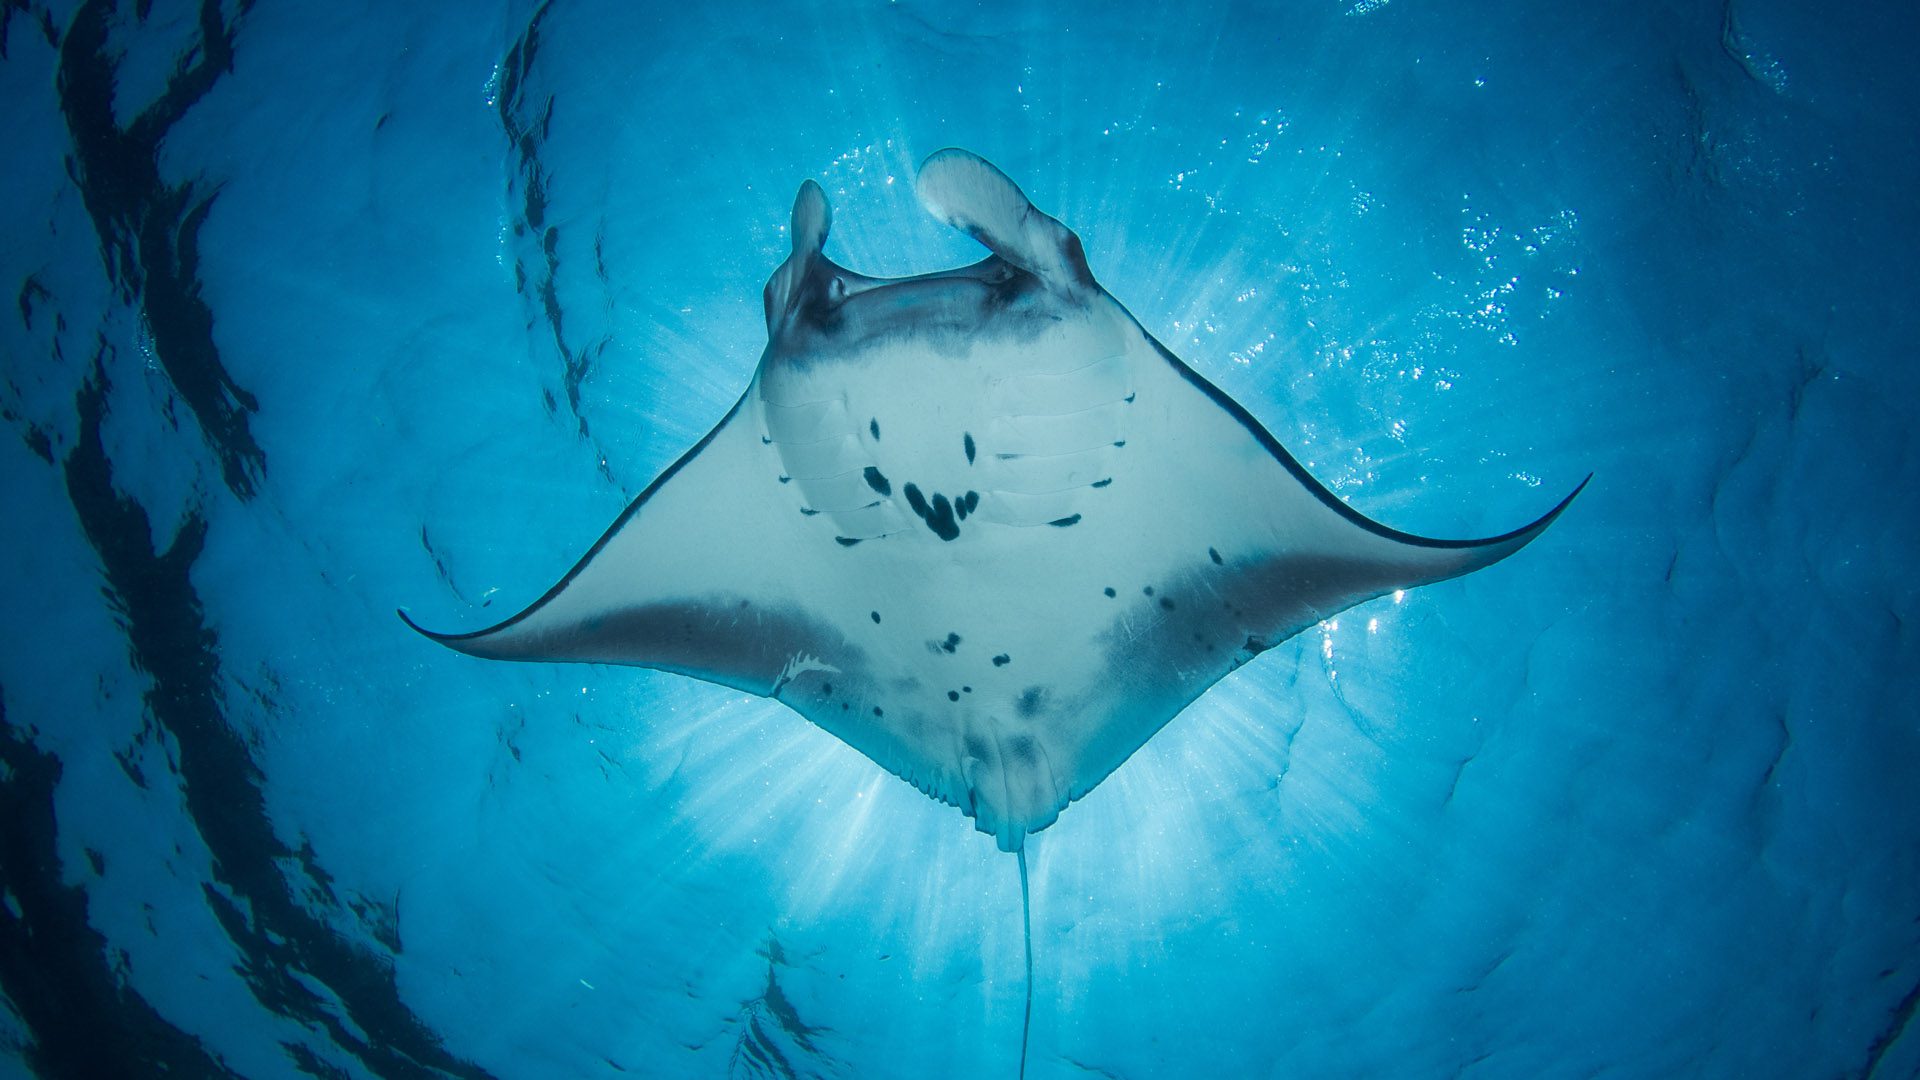 A manta ray in the ocean